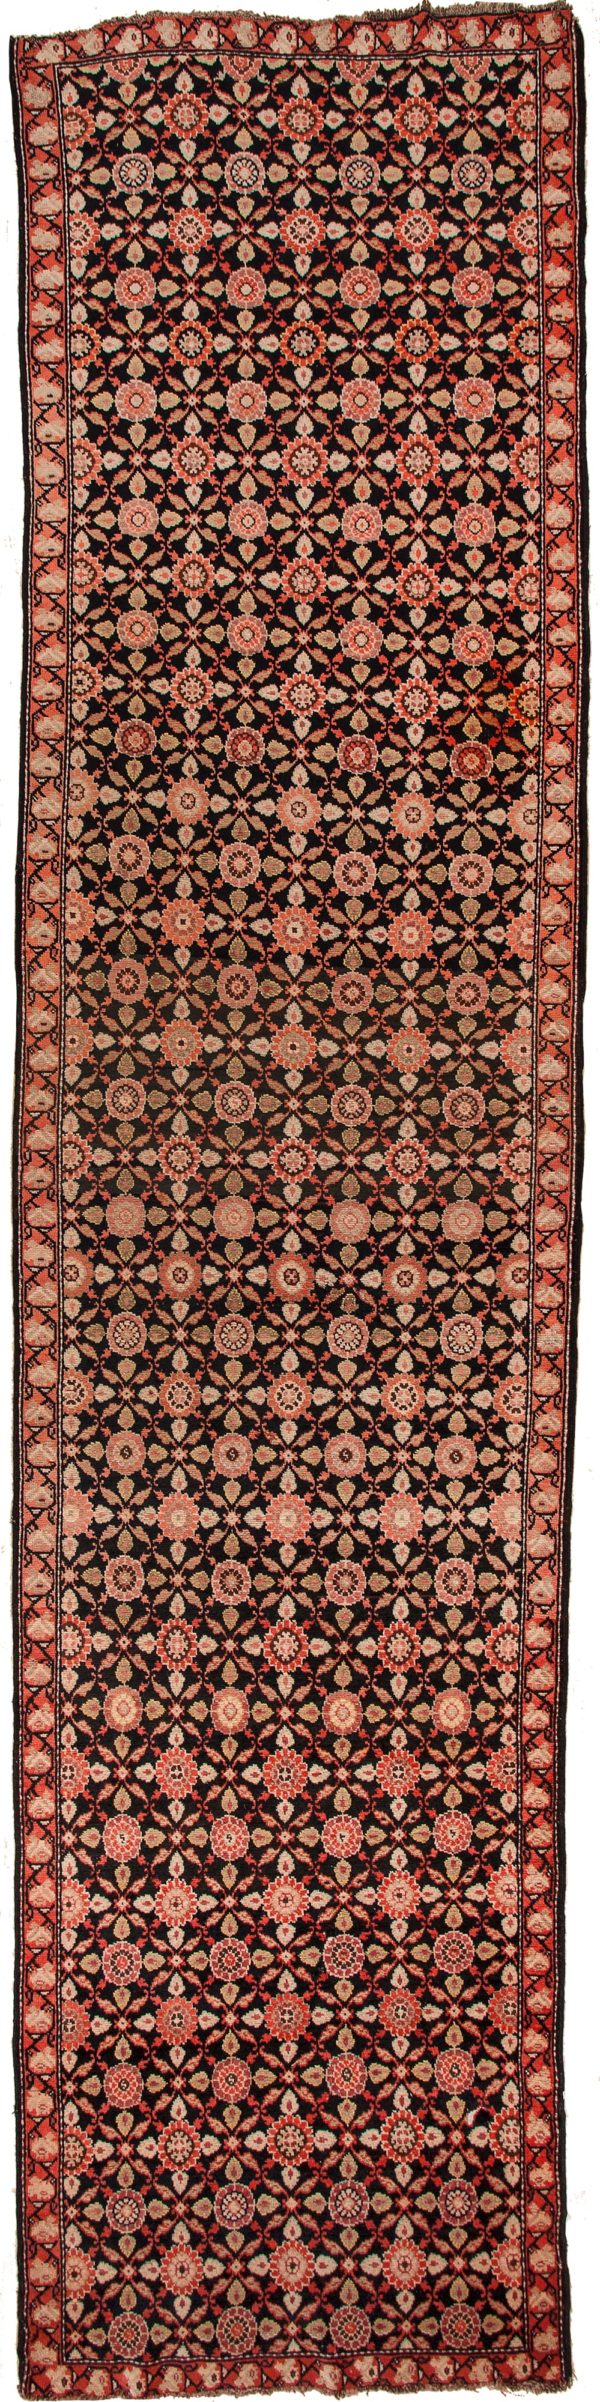 Old Caucasian Karabakh Runner at Essie Carpets, Mayfair London